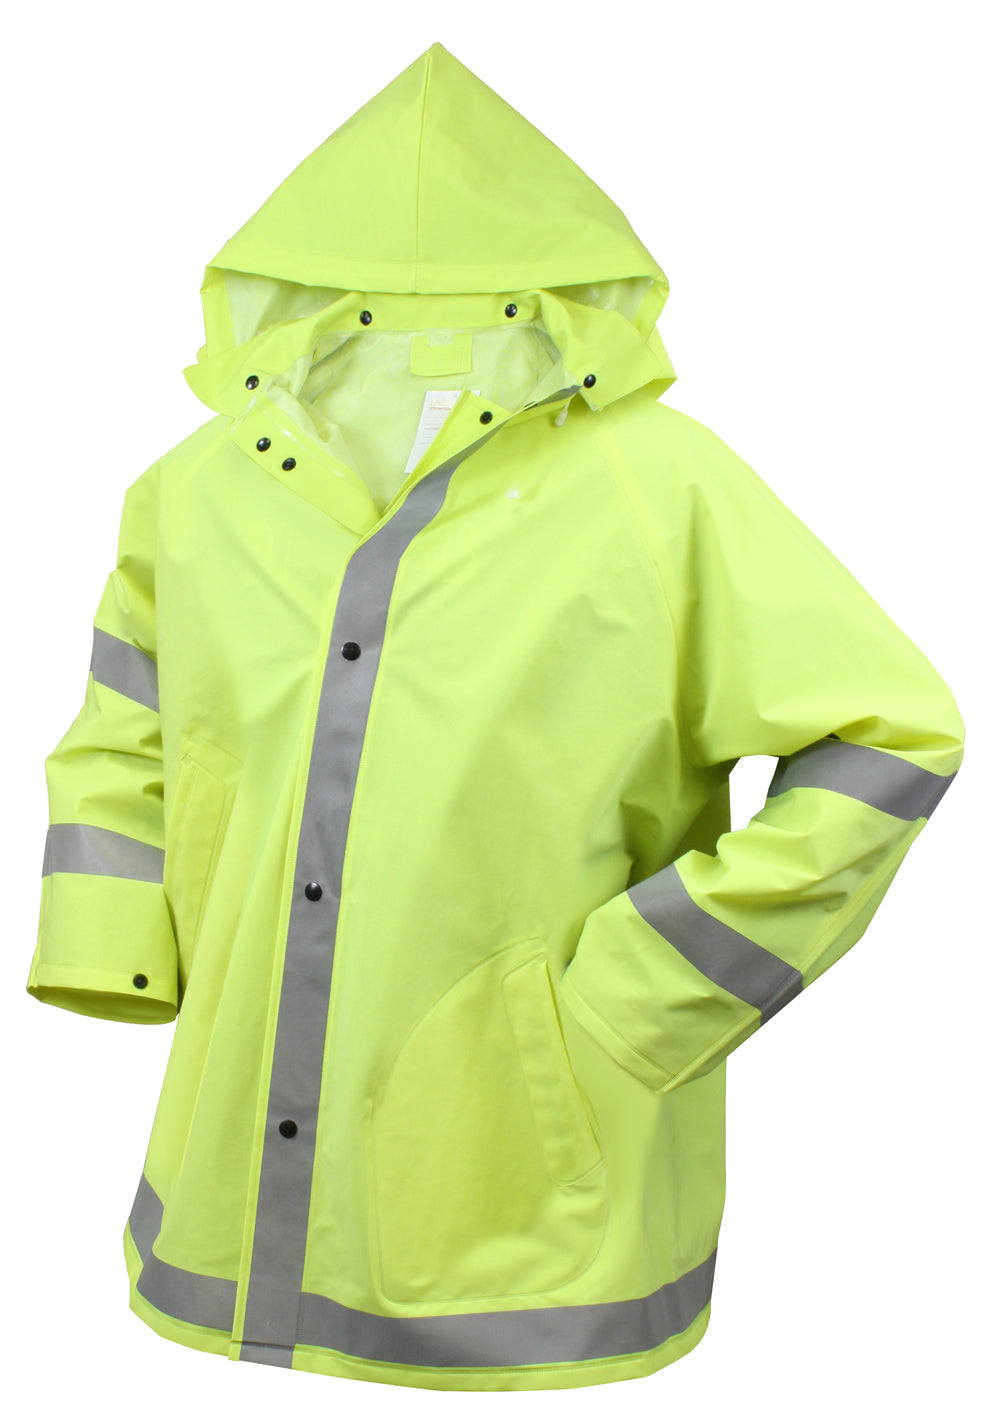 Rothco Safety Reflective Rain Jacket - Tactical Choice Plus